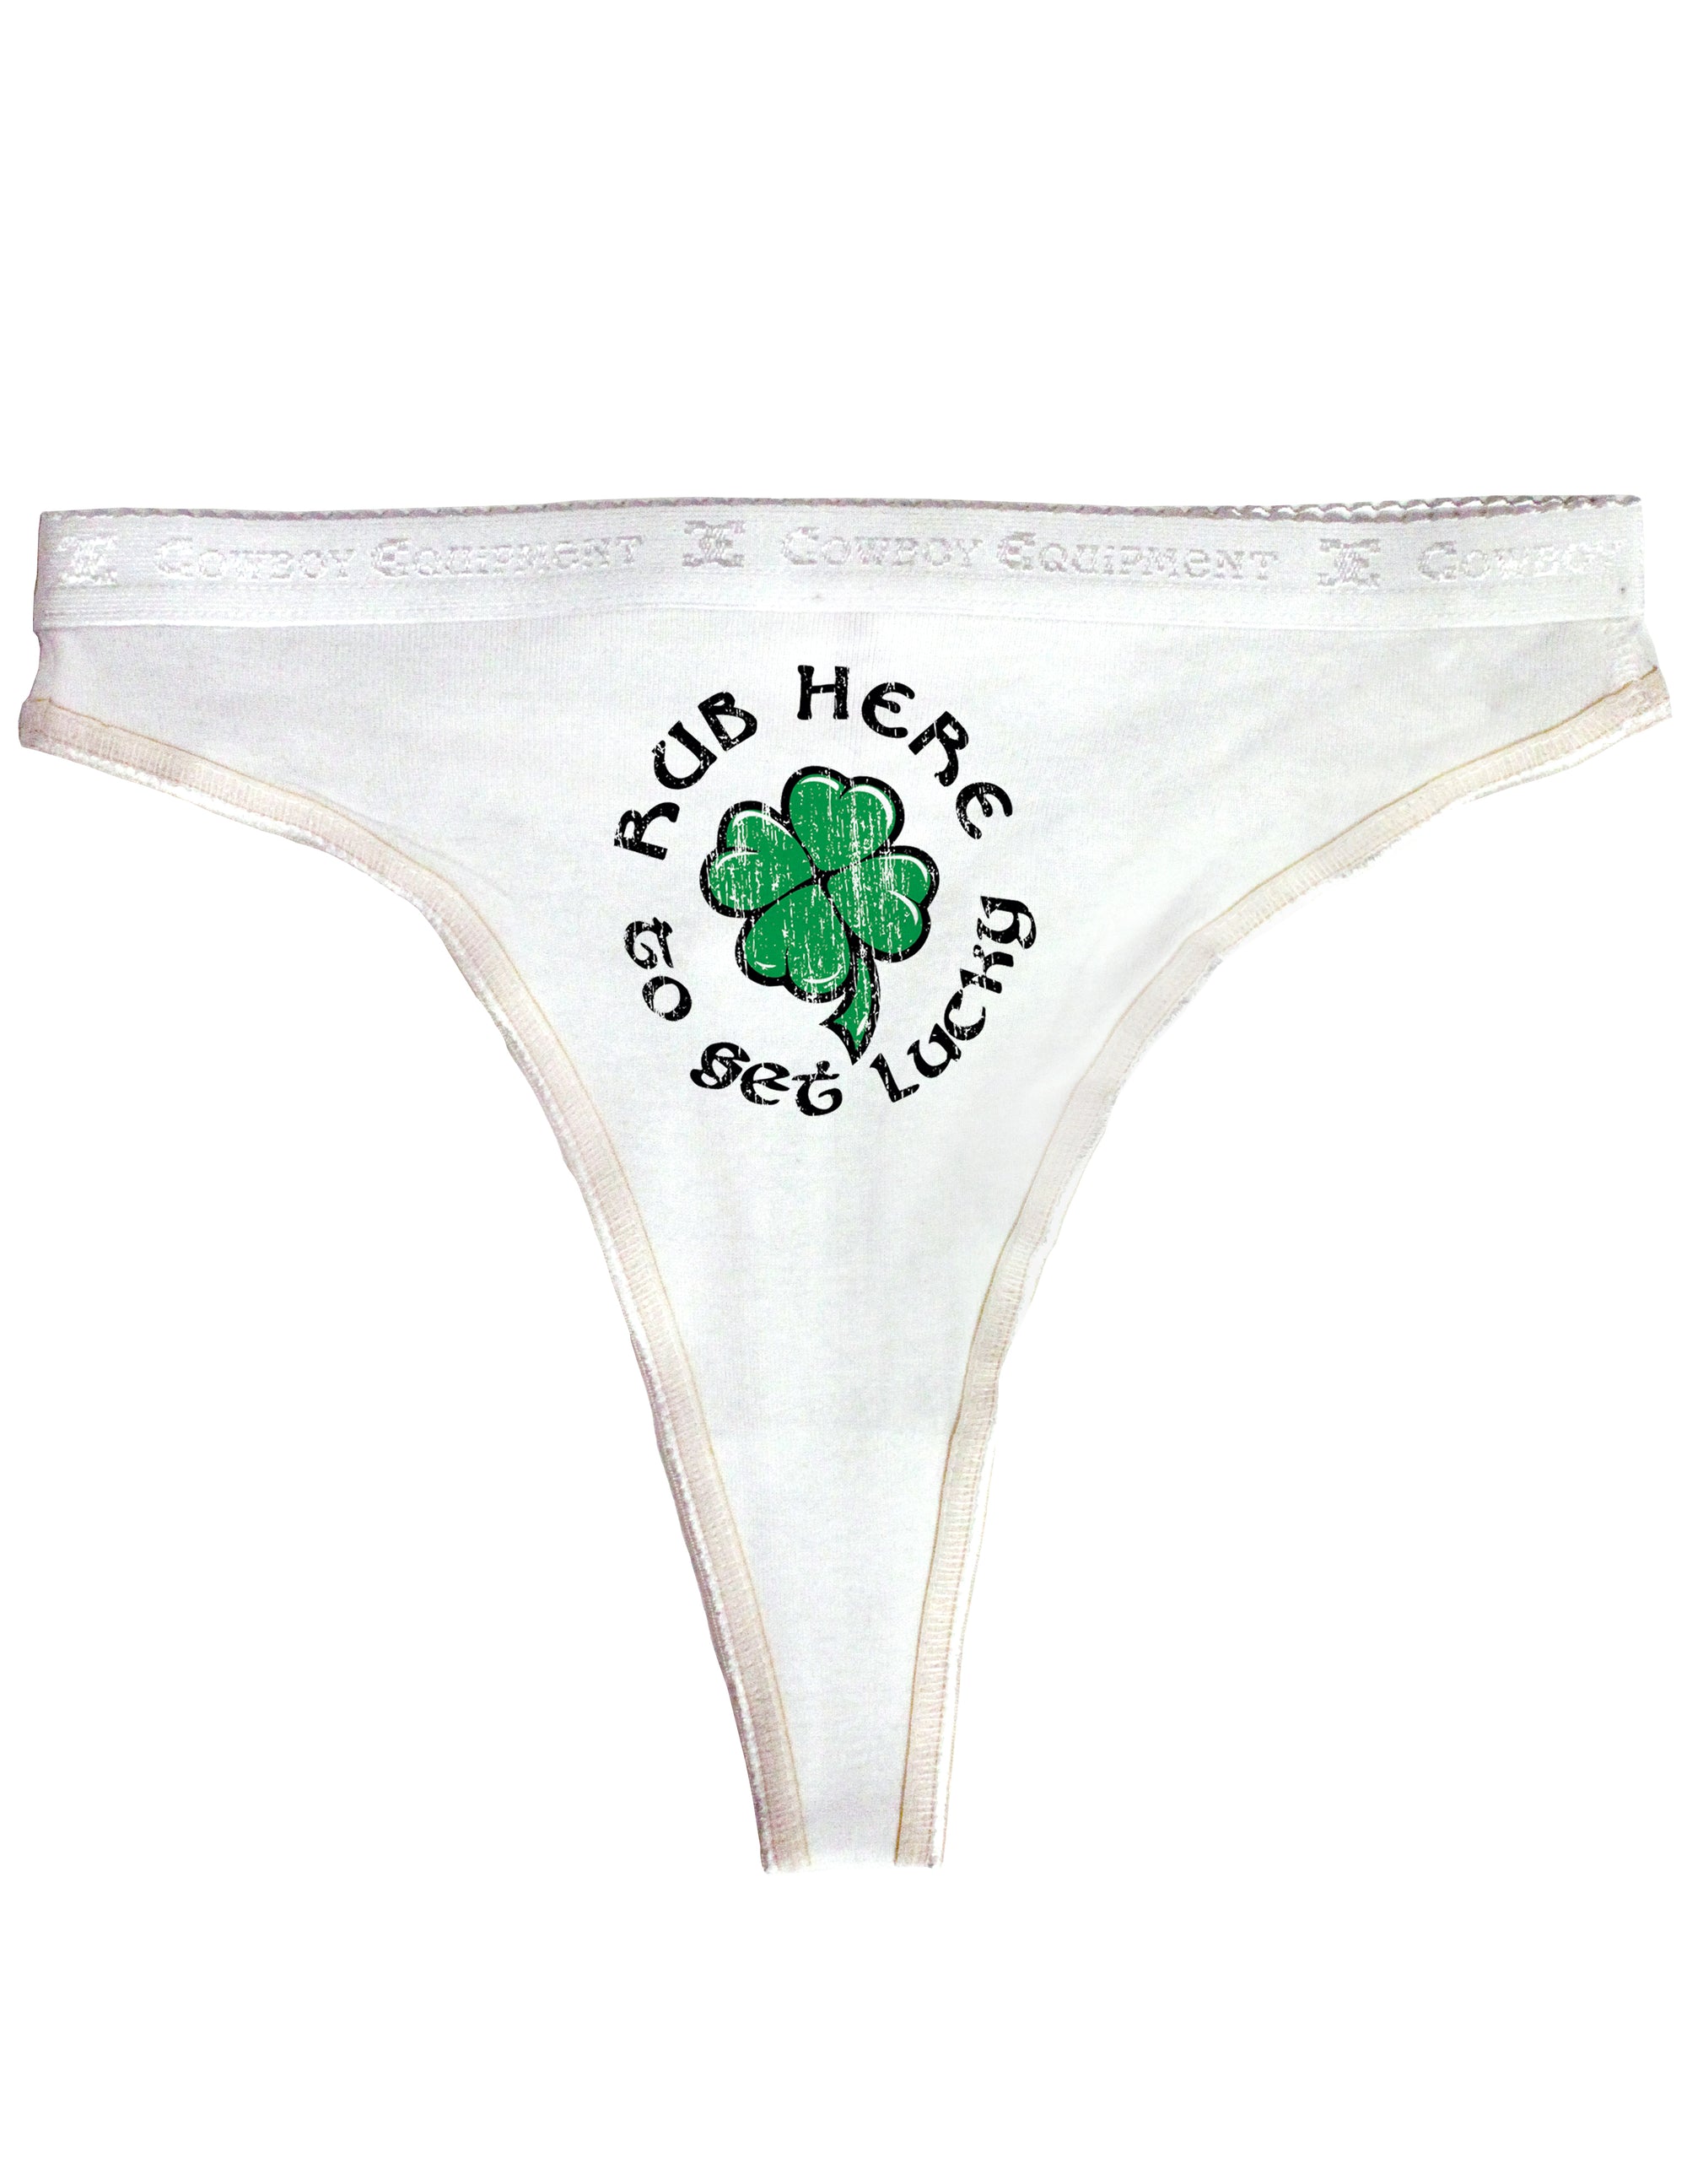 Get Lucky St Patricks Day Thong - Basic White Thong Underwear